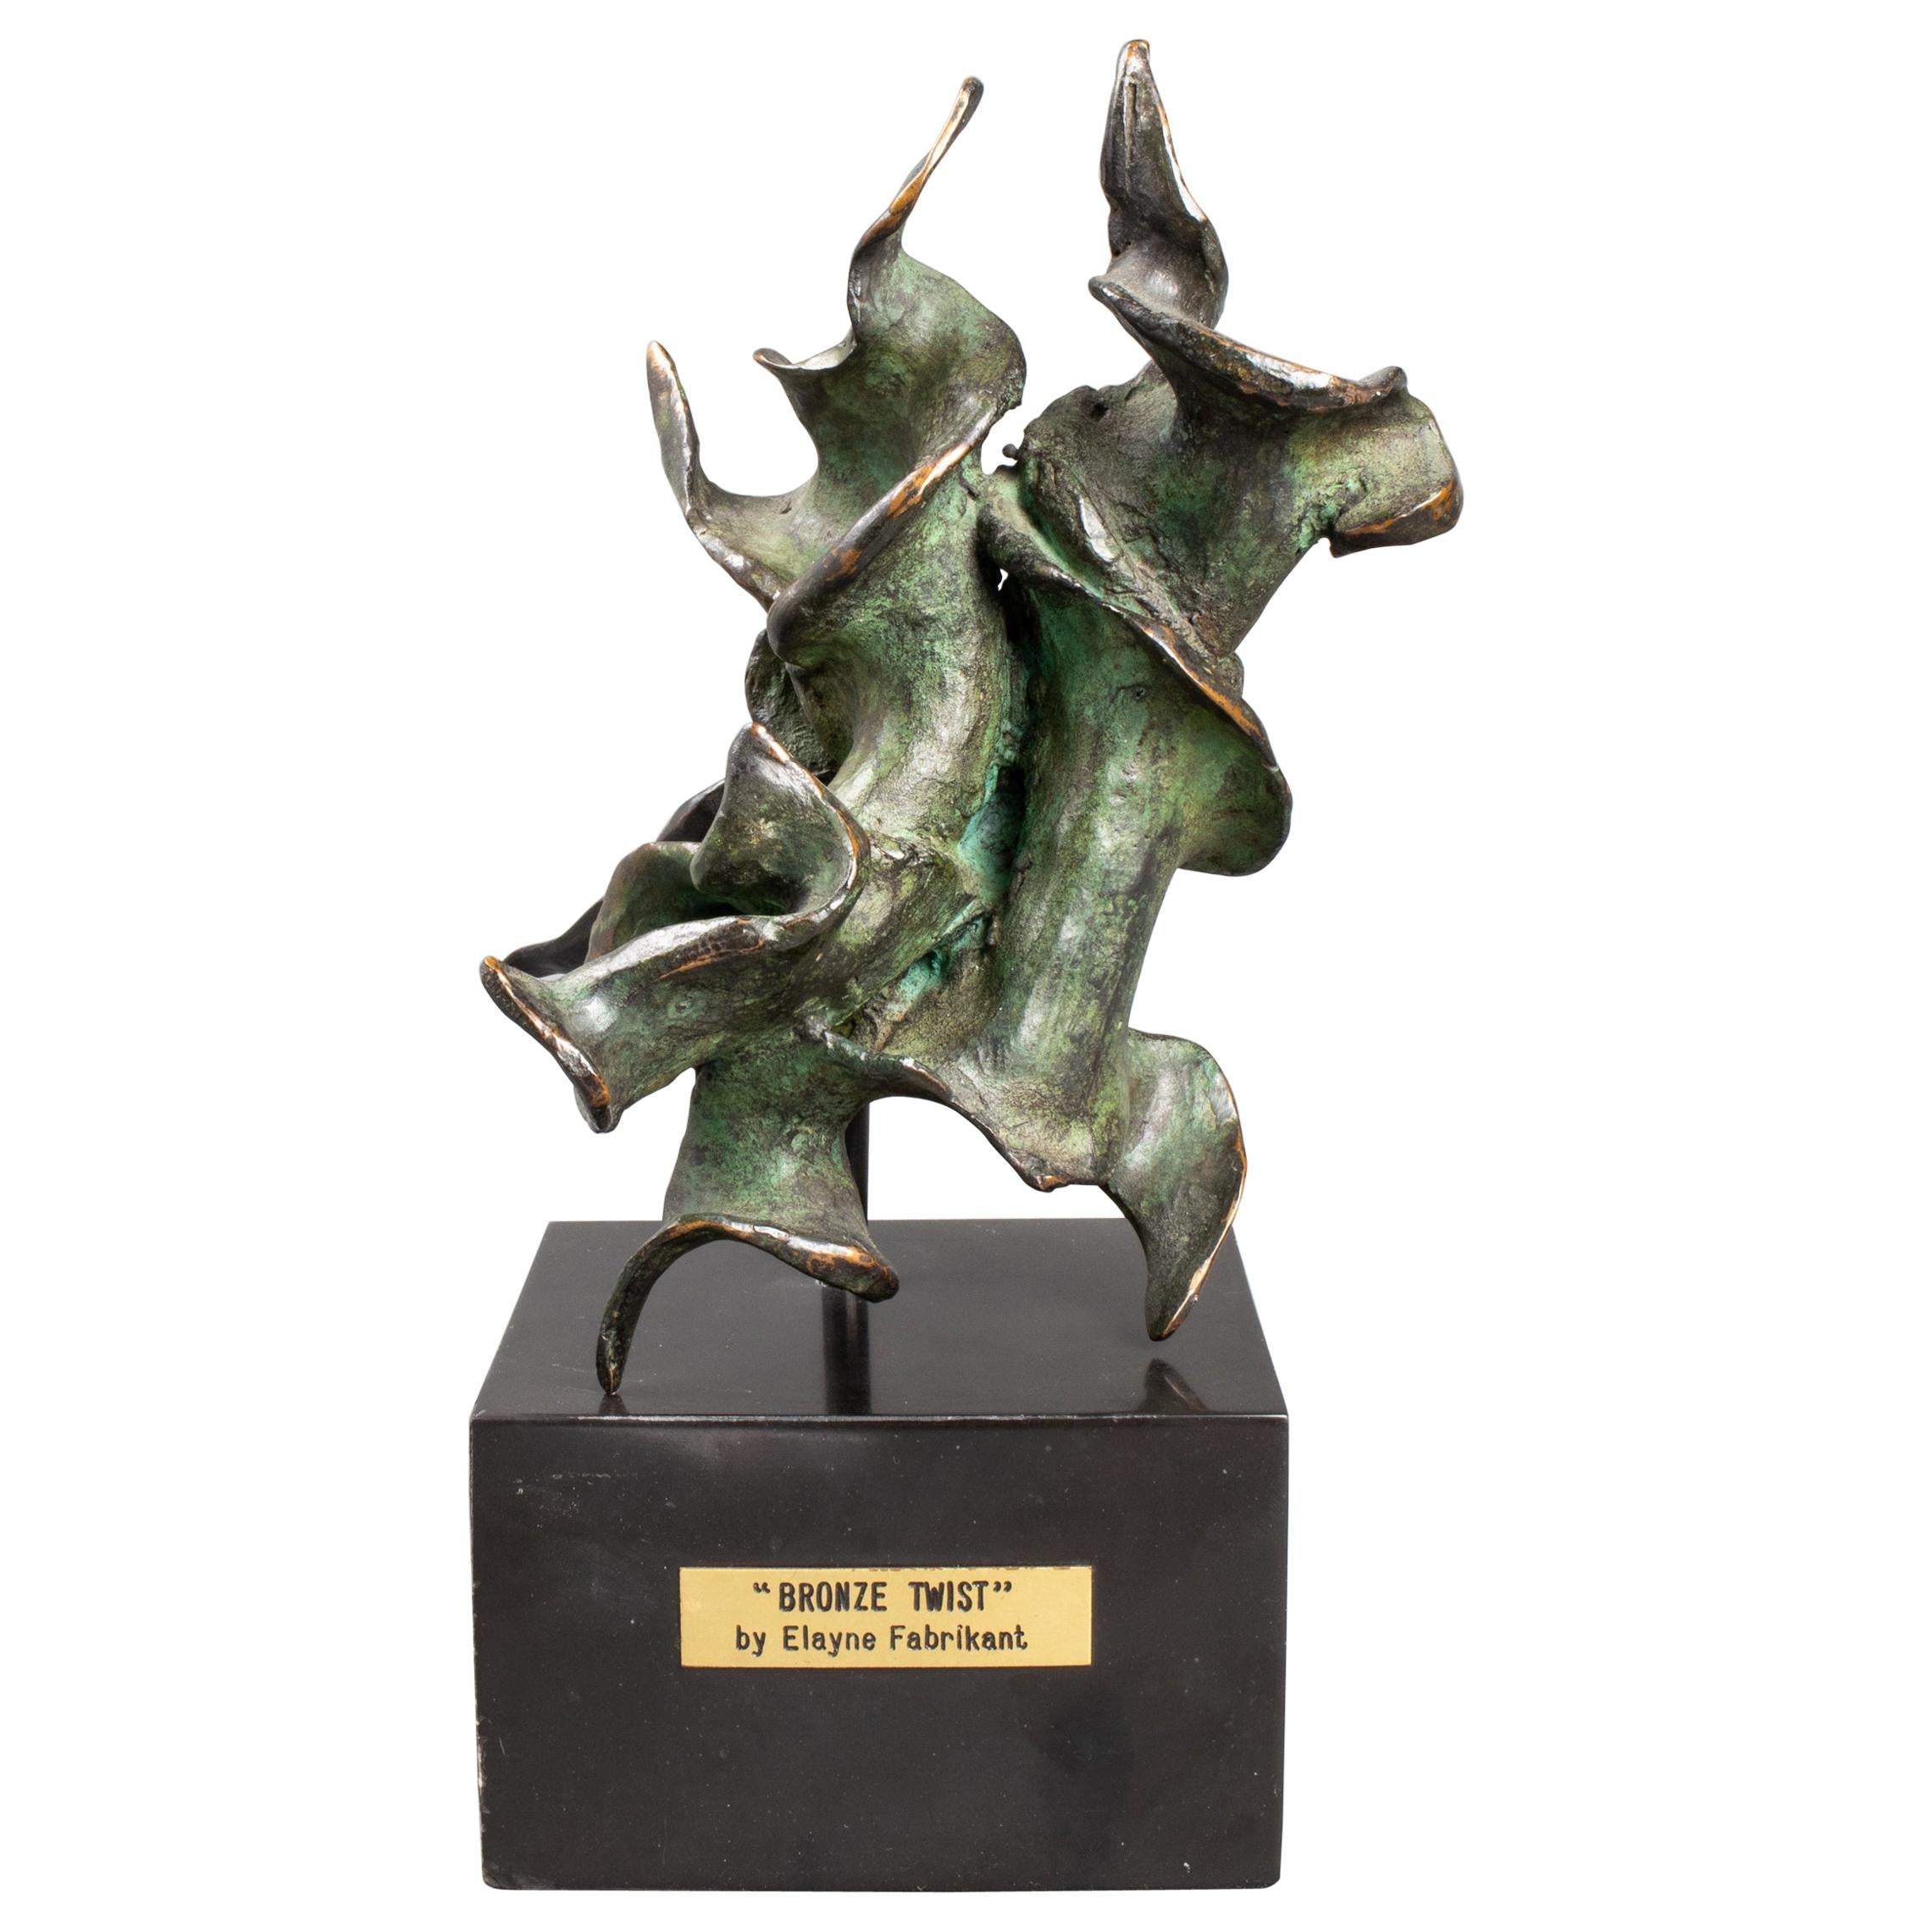 Elayne Fabrikant "Bronze Twist" Modern Sculpture For Sale